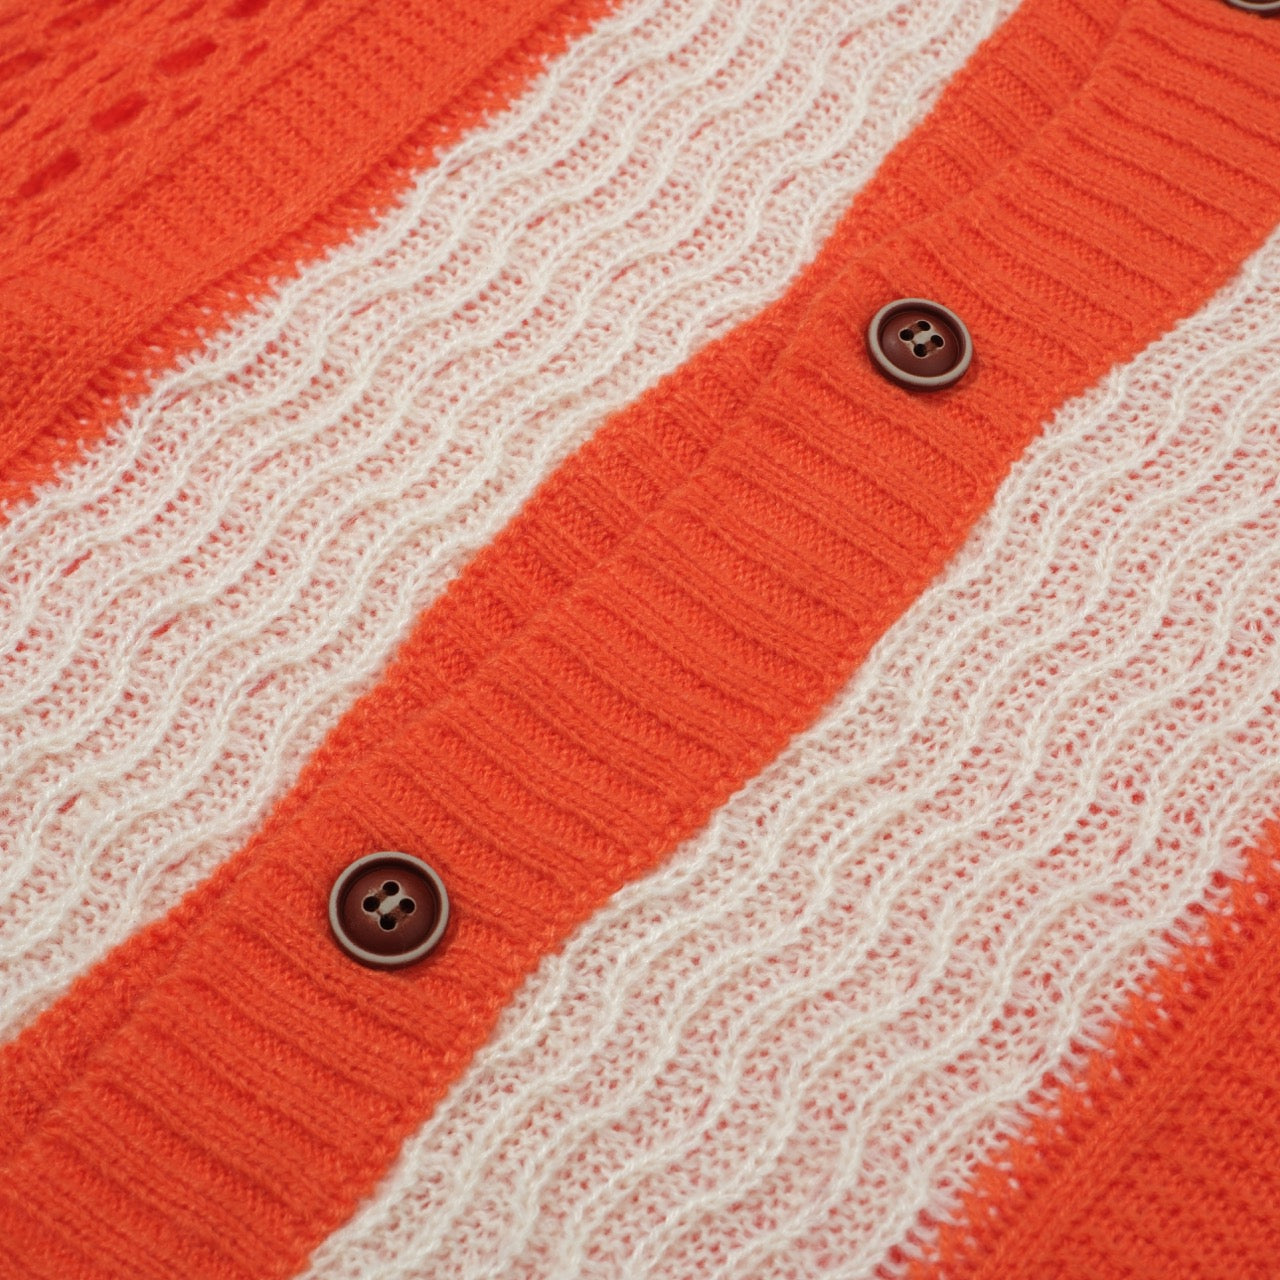 OXKNIT Men's Orange Wavy Stripes Beach Knitted Resort Polo Shirt, L